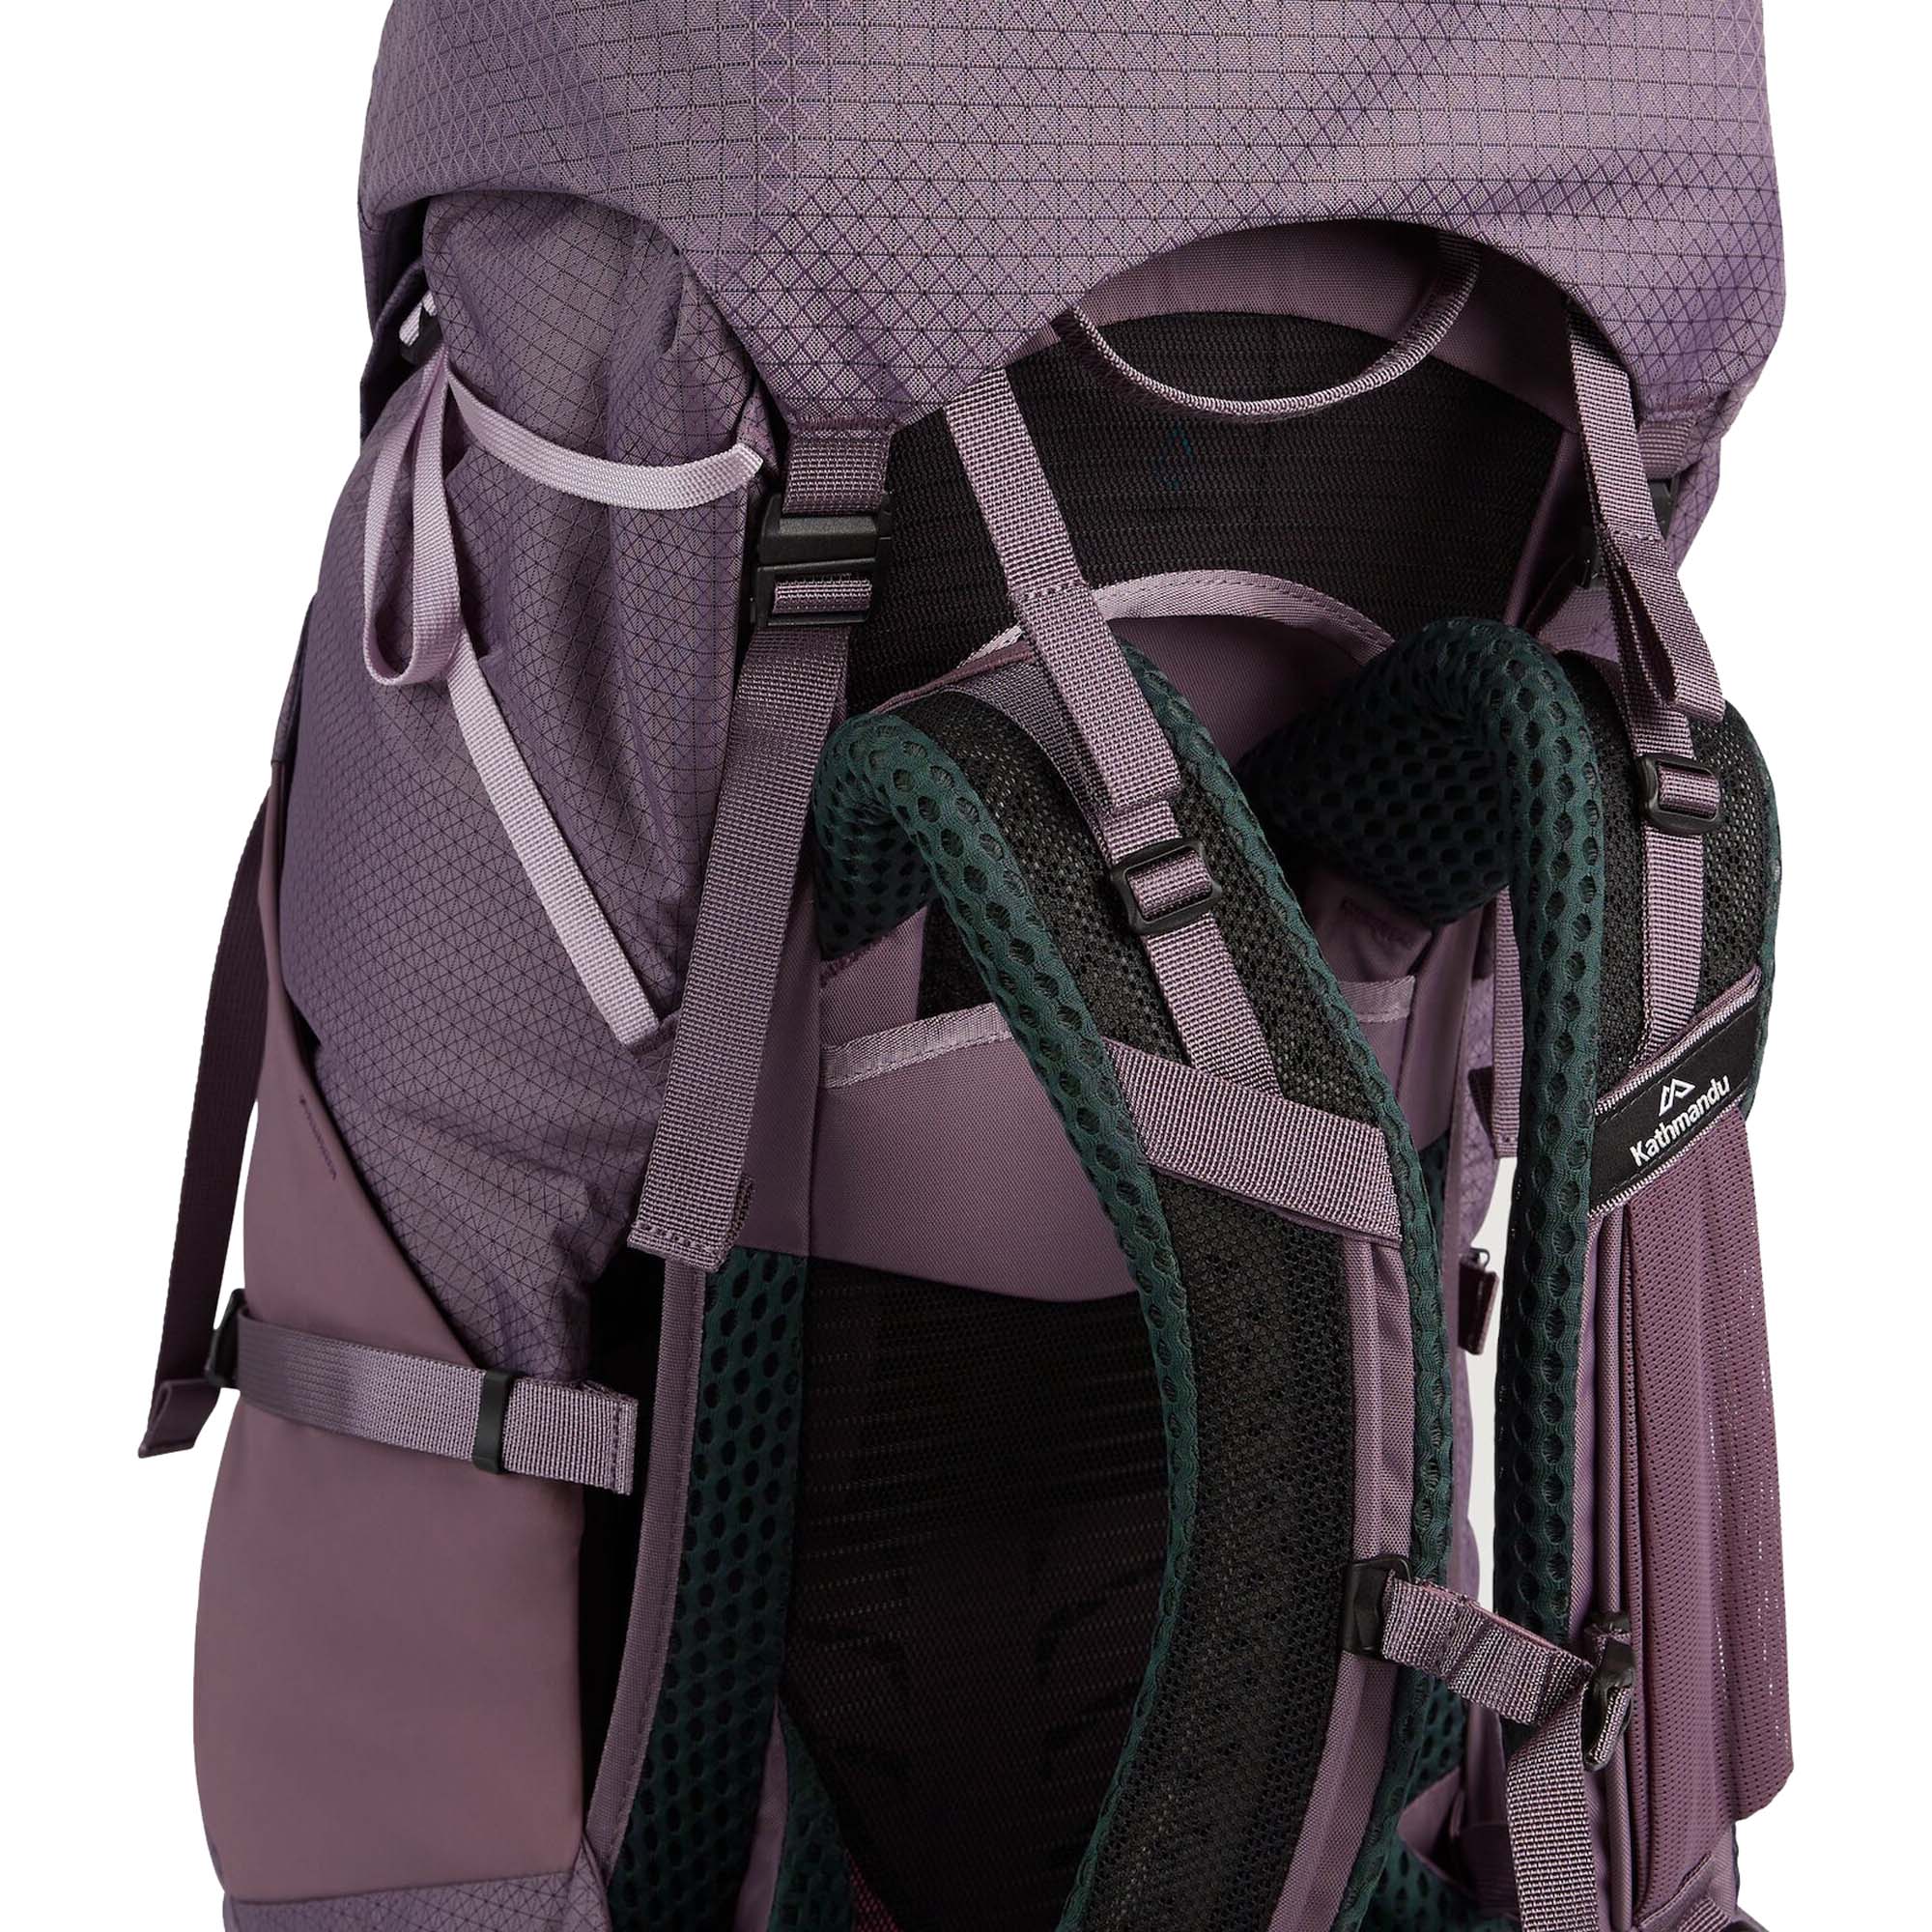 Kathmandu Valorous 45L Women's Hiking Backpack